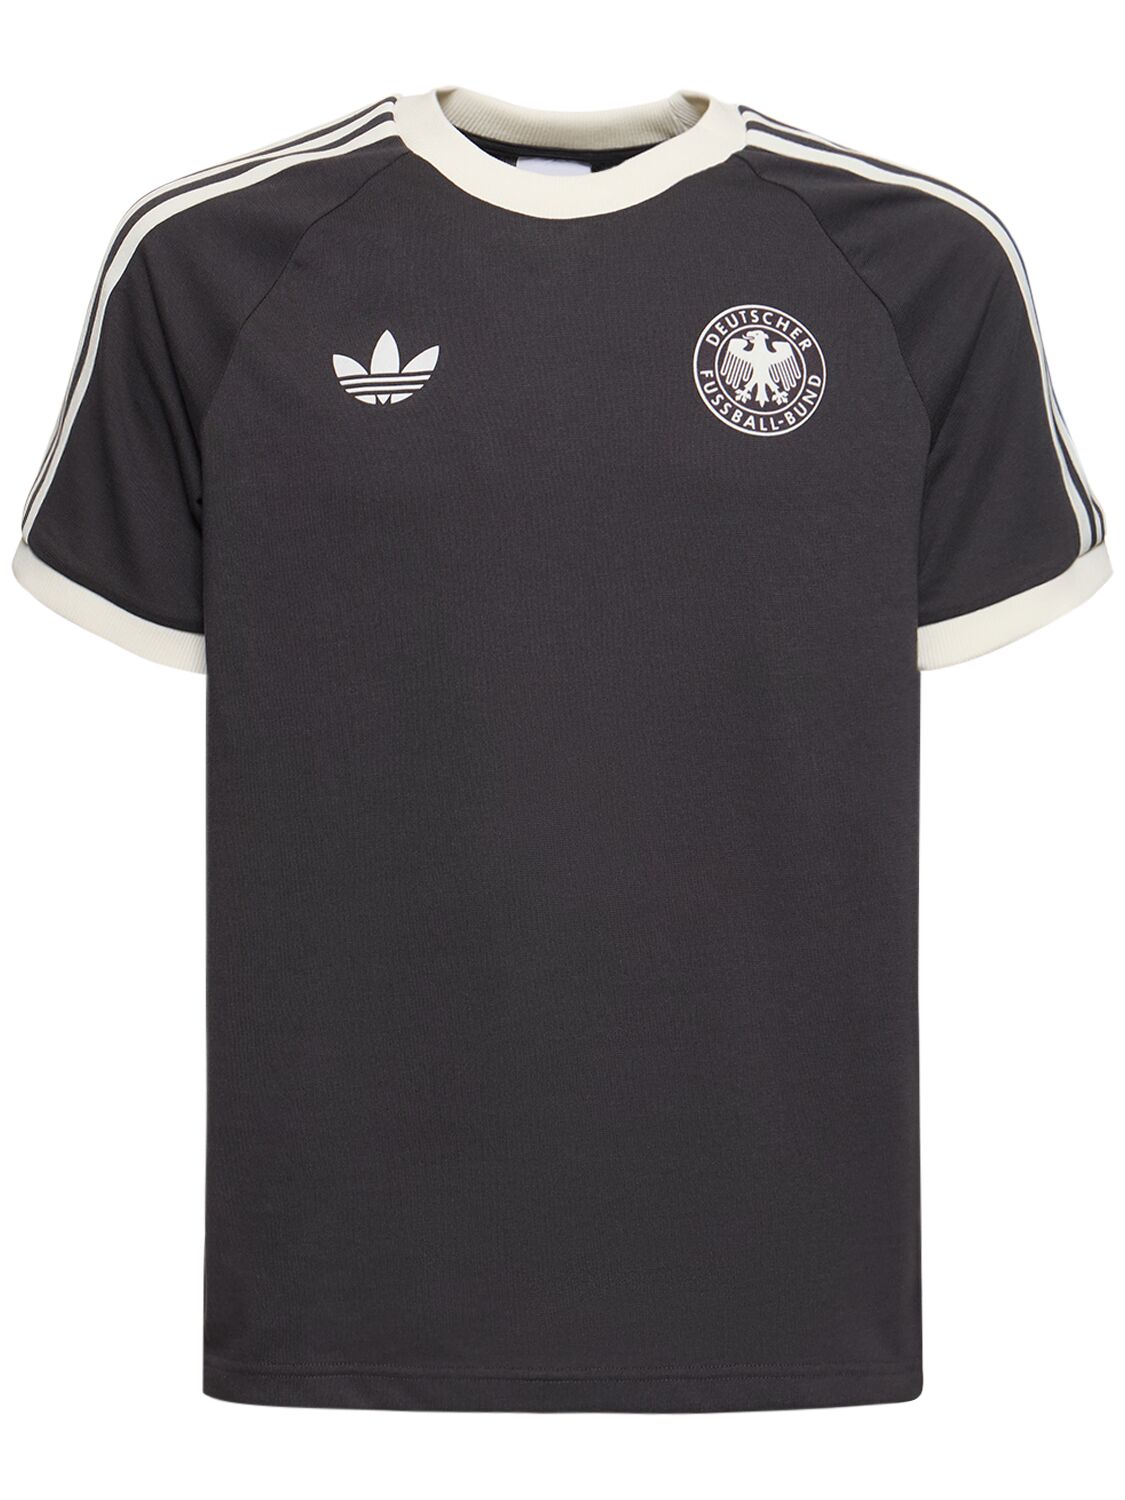 Adidas Originals Germany T-shirt In Black,white